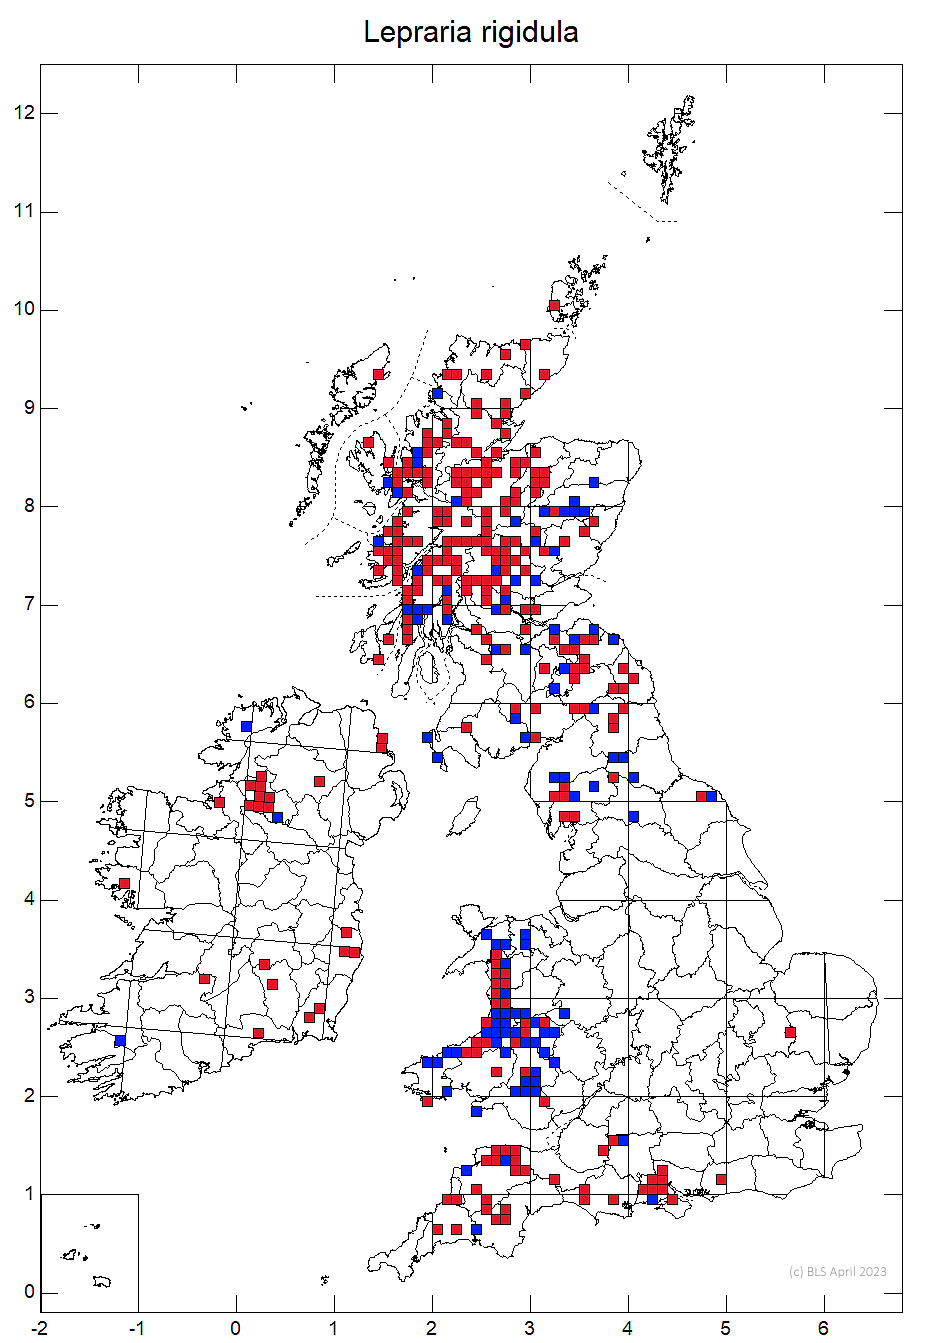 Lepraria rigidula 10km sq distribution map